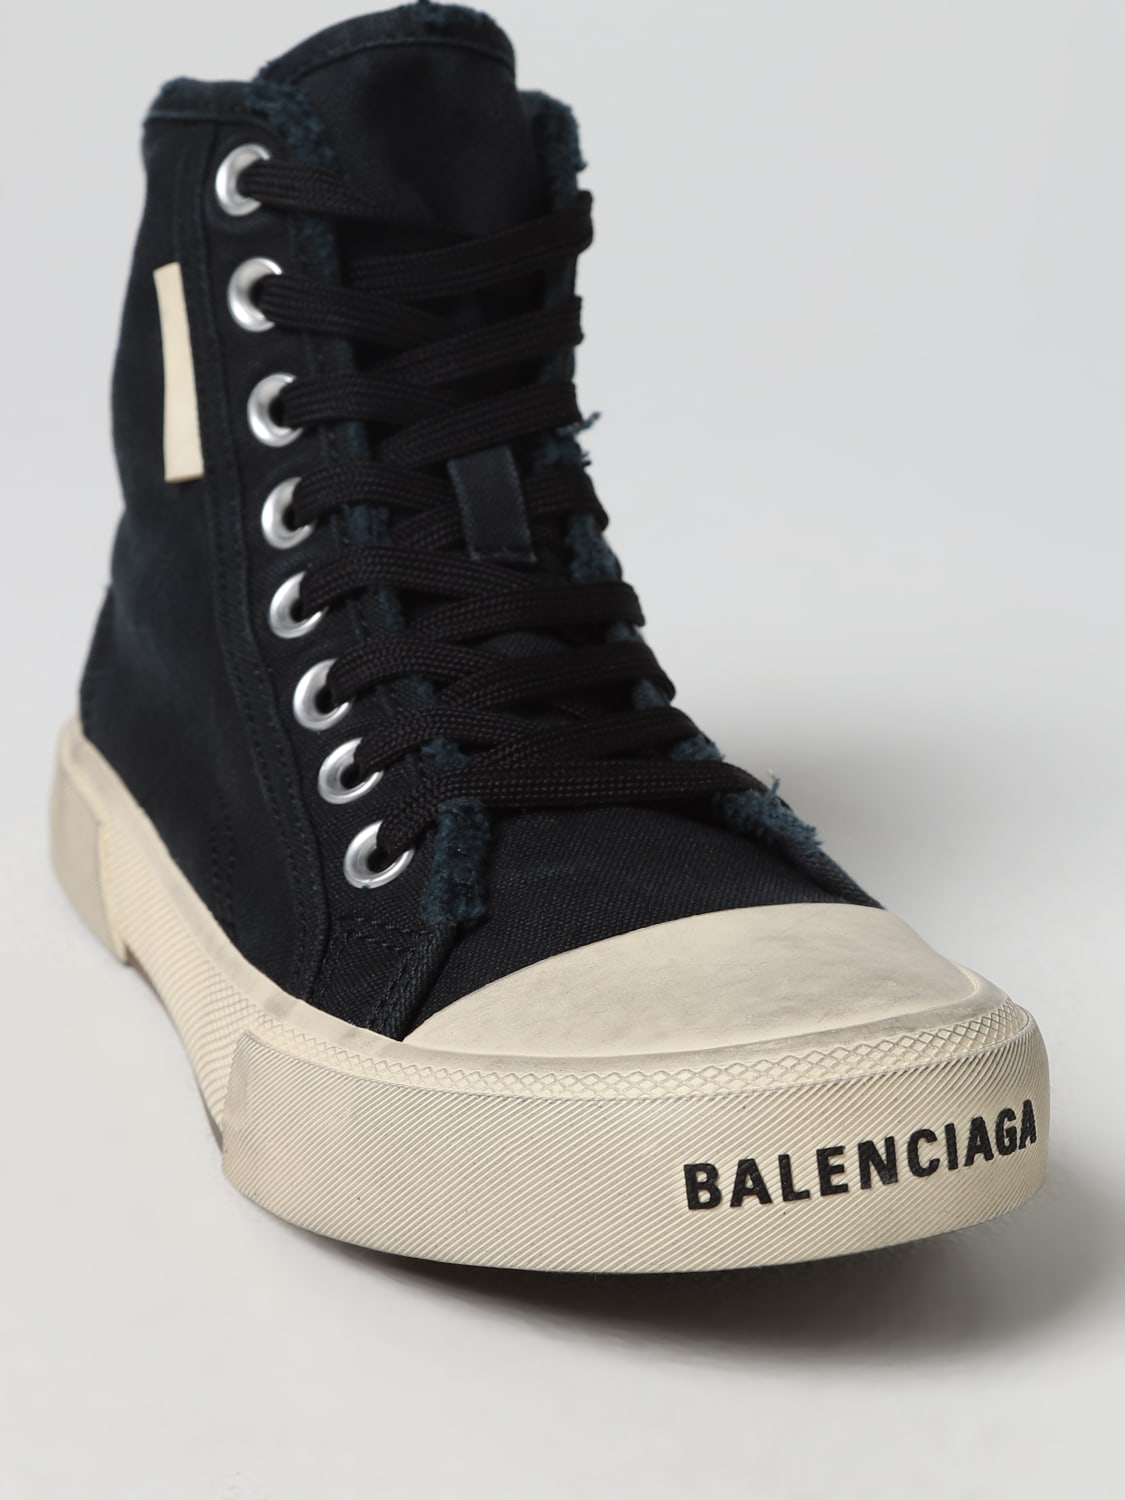 Modig vokal publikum BALENCIAGA: Paris sneakers in used canvas - Black | Balenciaga sneakers  688756W3RC1 online at GIGLIO.COM